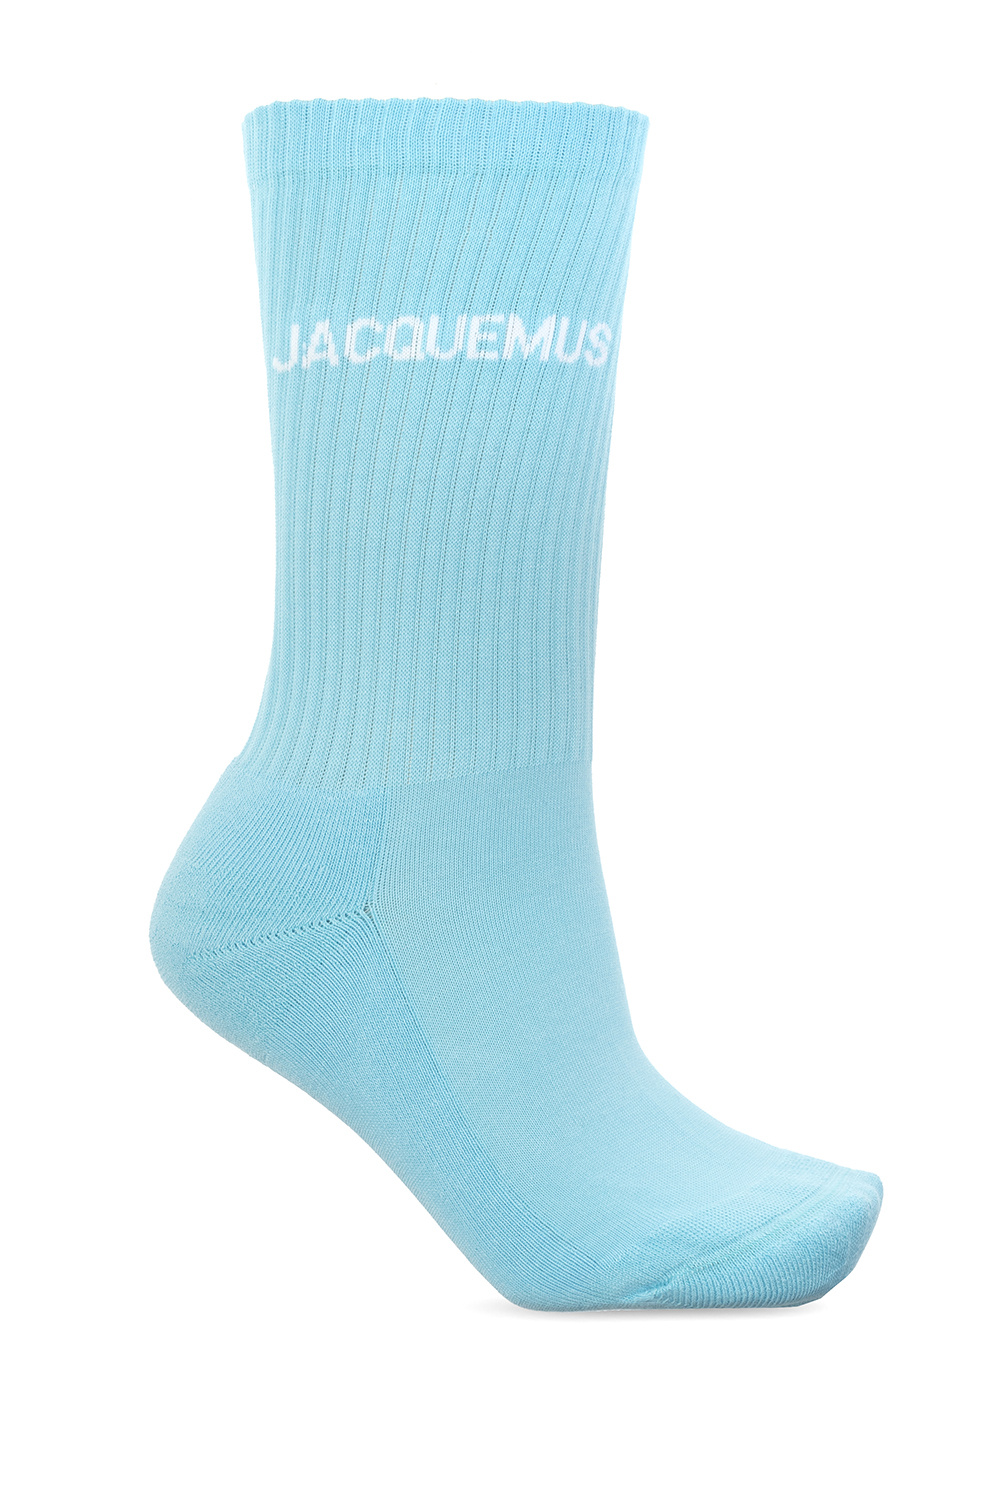 Jacquemus Socks with logo